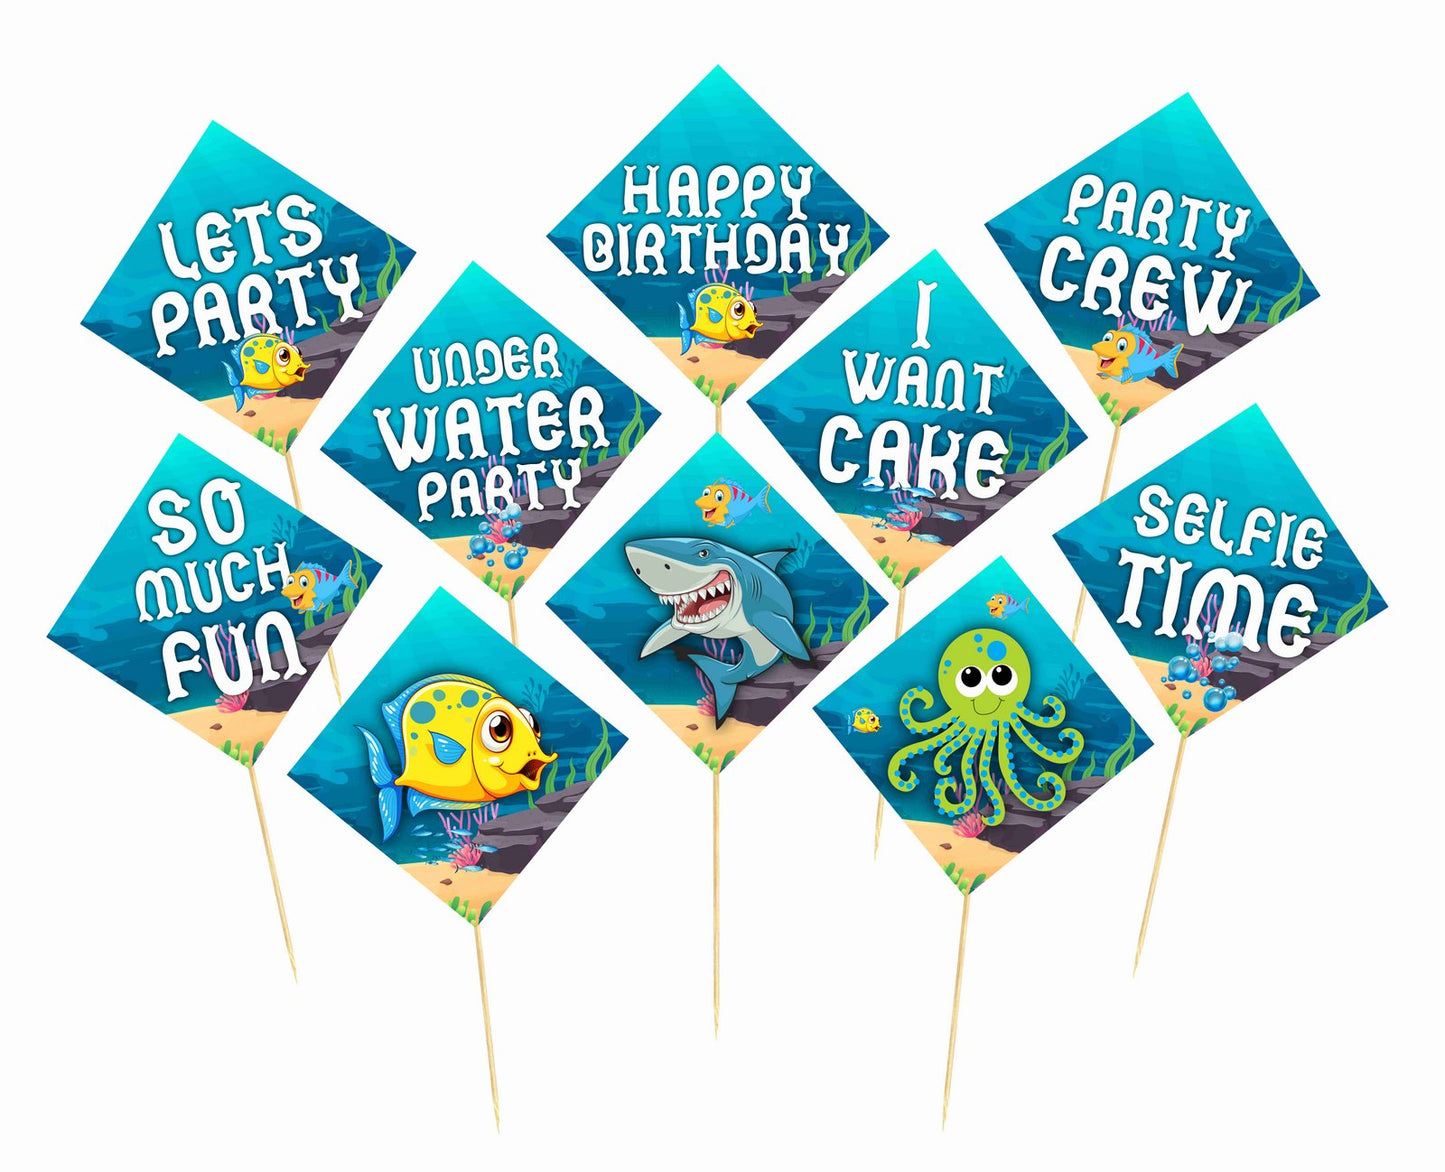 Ocean Underwater Theme Birthday Photo Booth Party Props Theme Birthday Party Decoration, Birthday Photo Booth Party Item for Adults and Kids